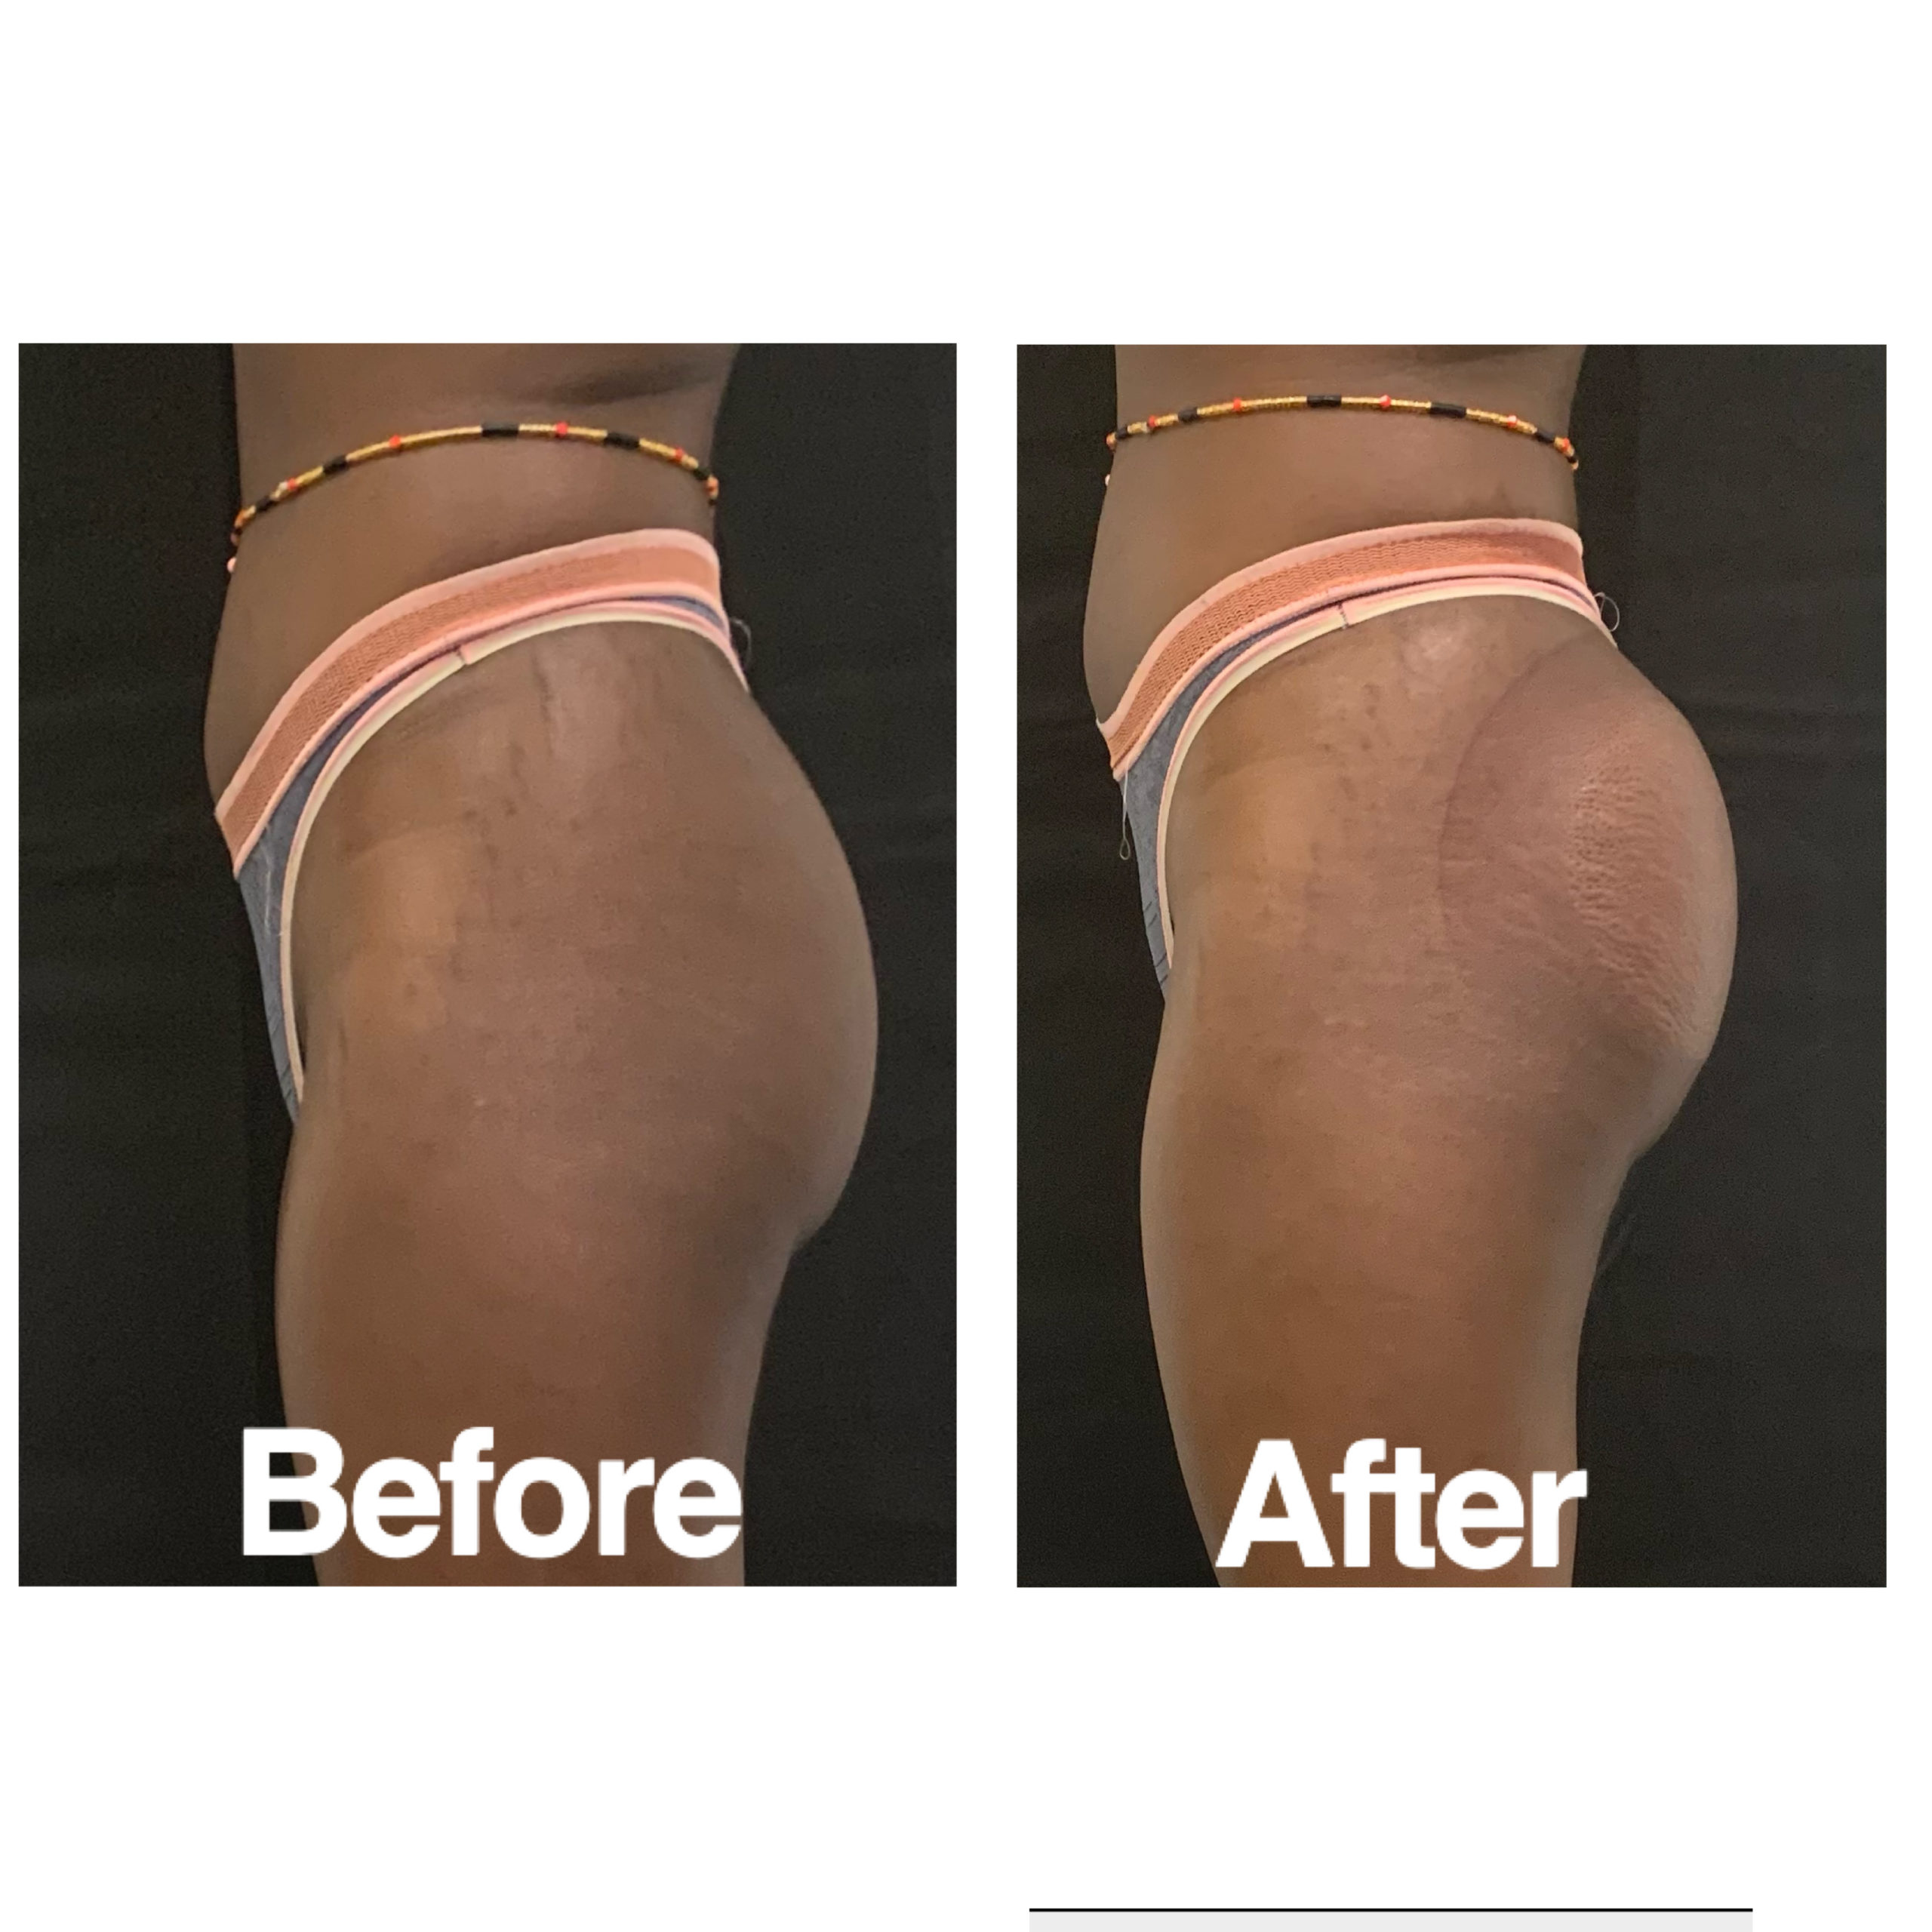 Vacuum Brazilian Butt Lift Before & After Photos | The Better Body Shop MedSpa In Houston, TX